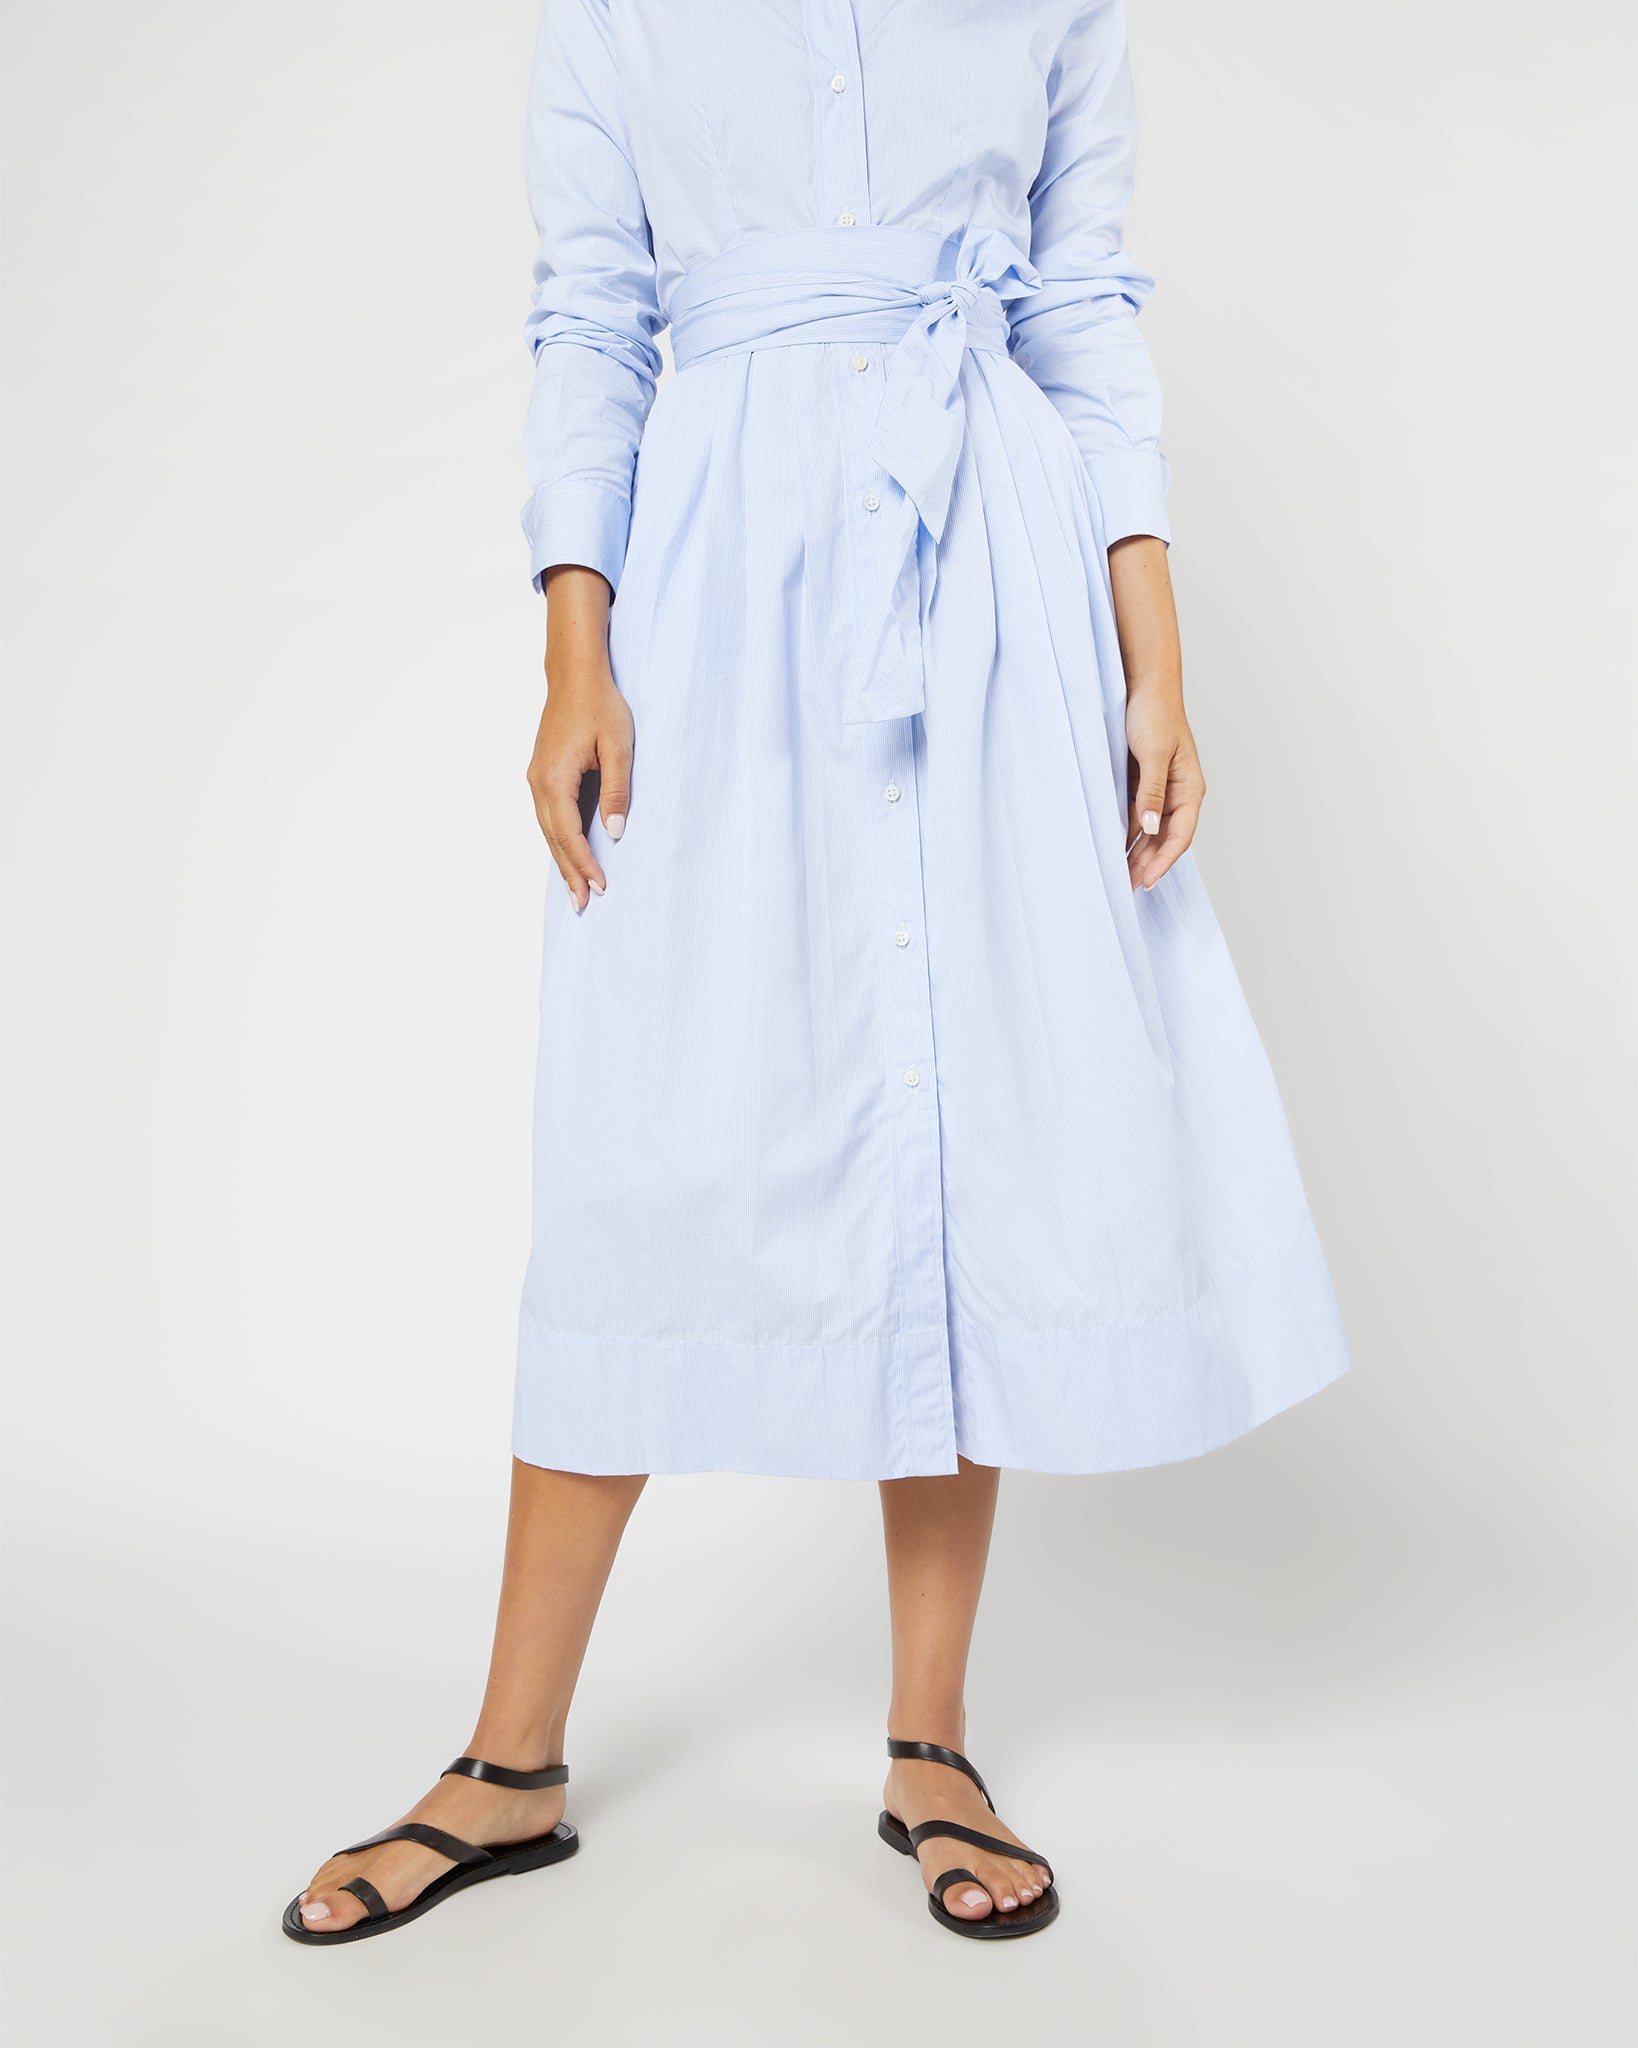 MTO Classic Shirtwaist Dress Model Image